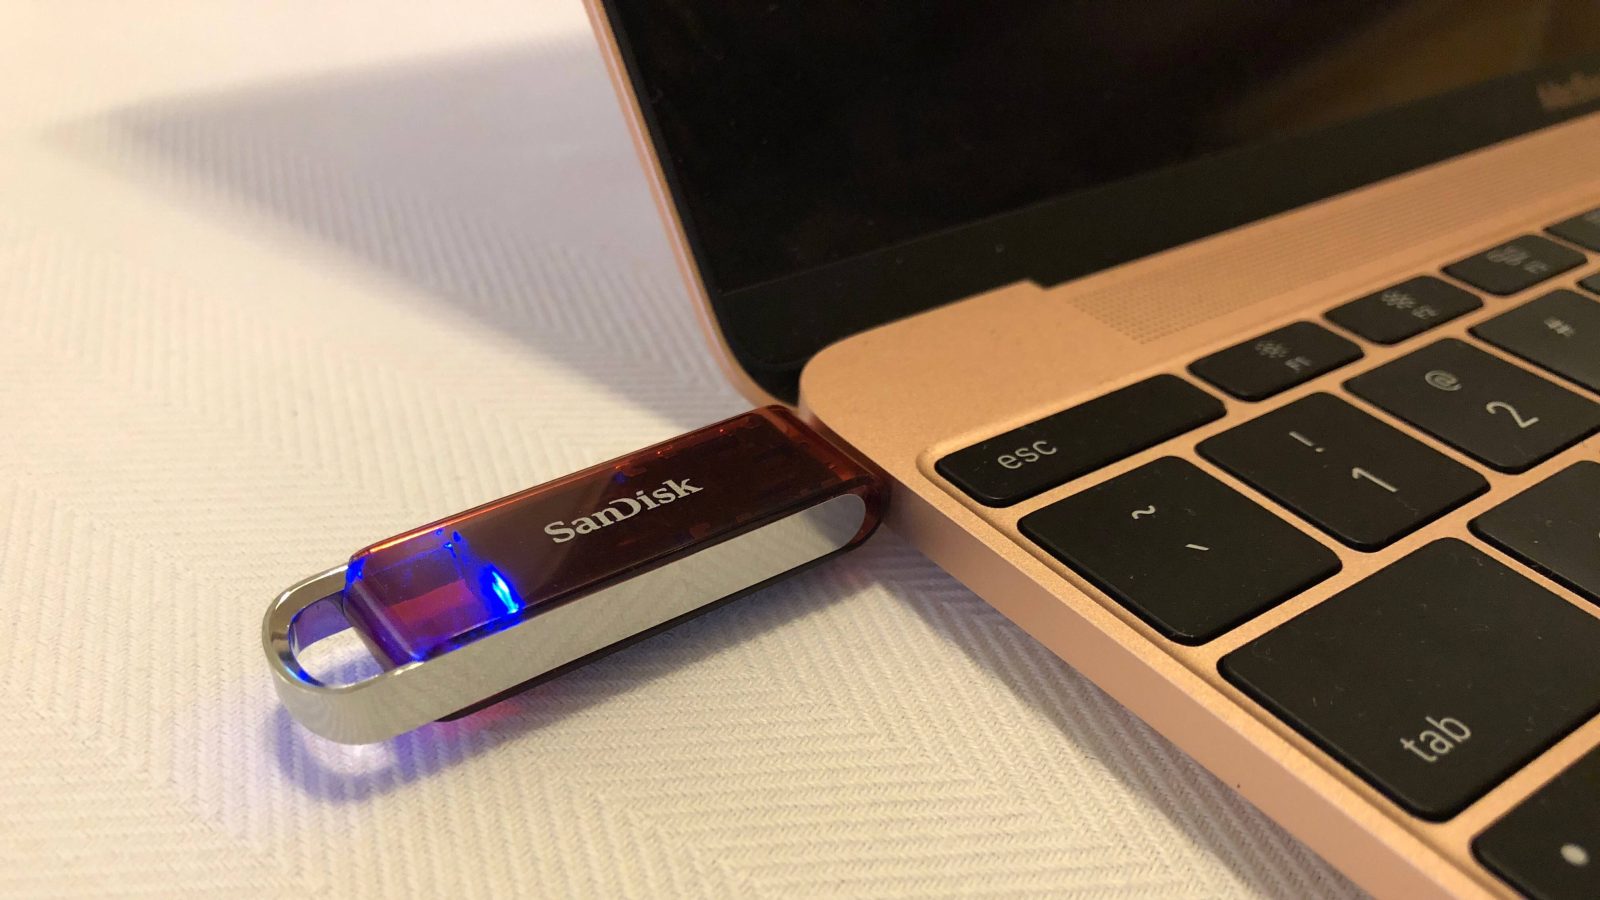 flash drive in macbook air